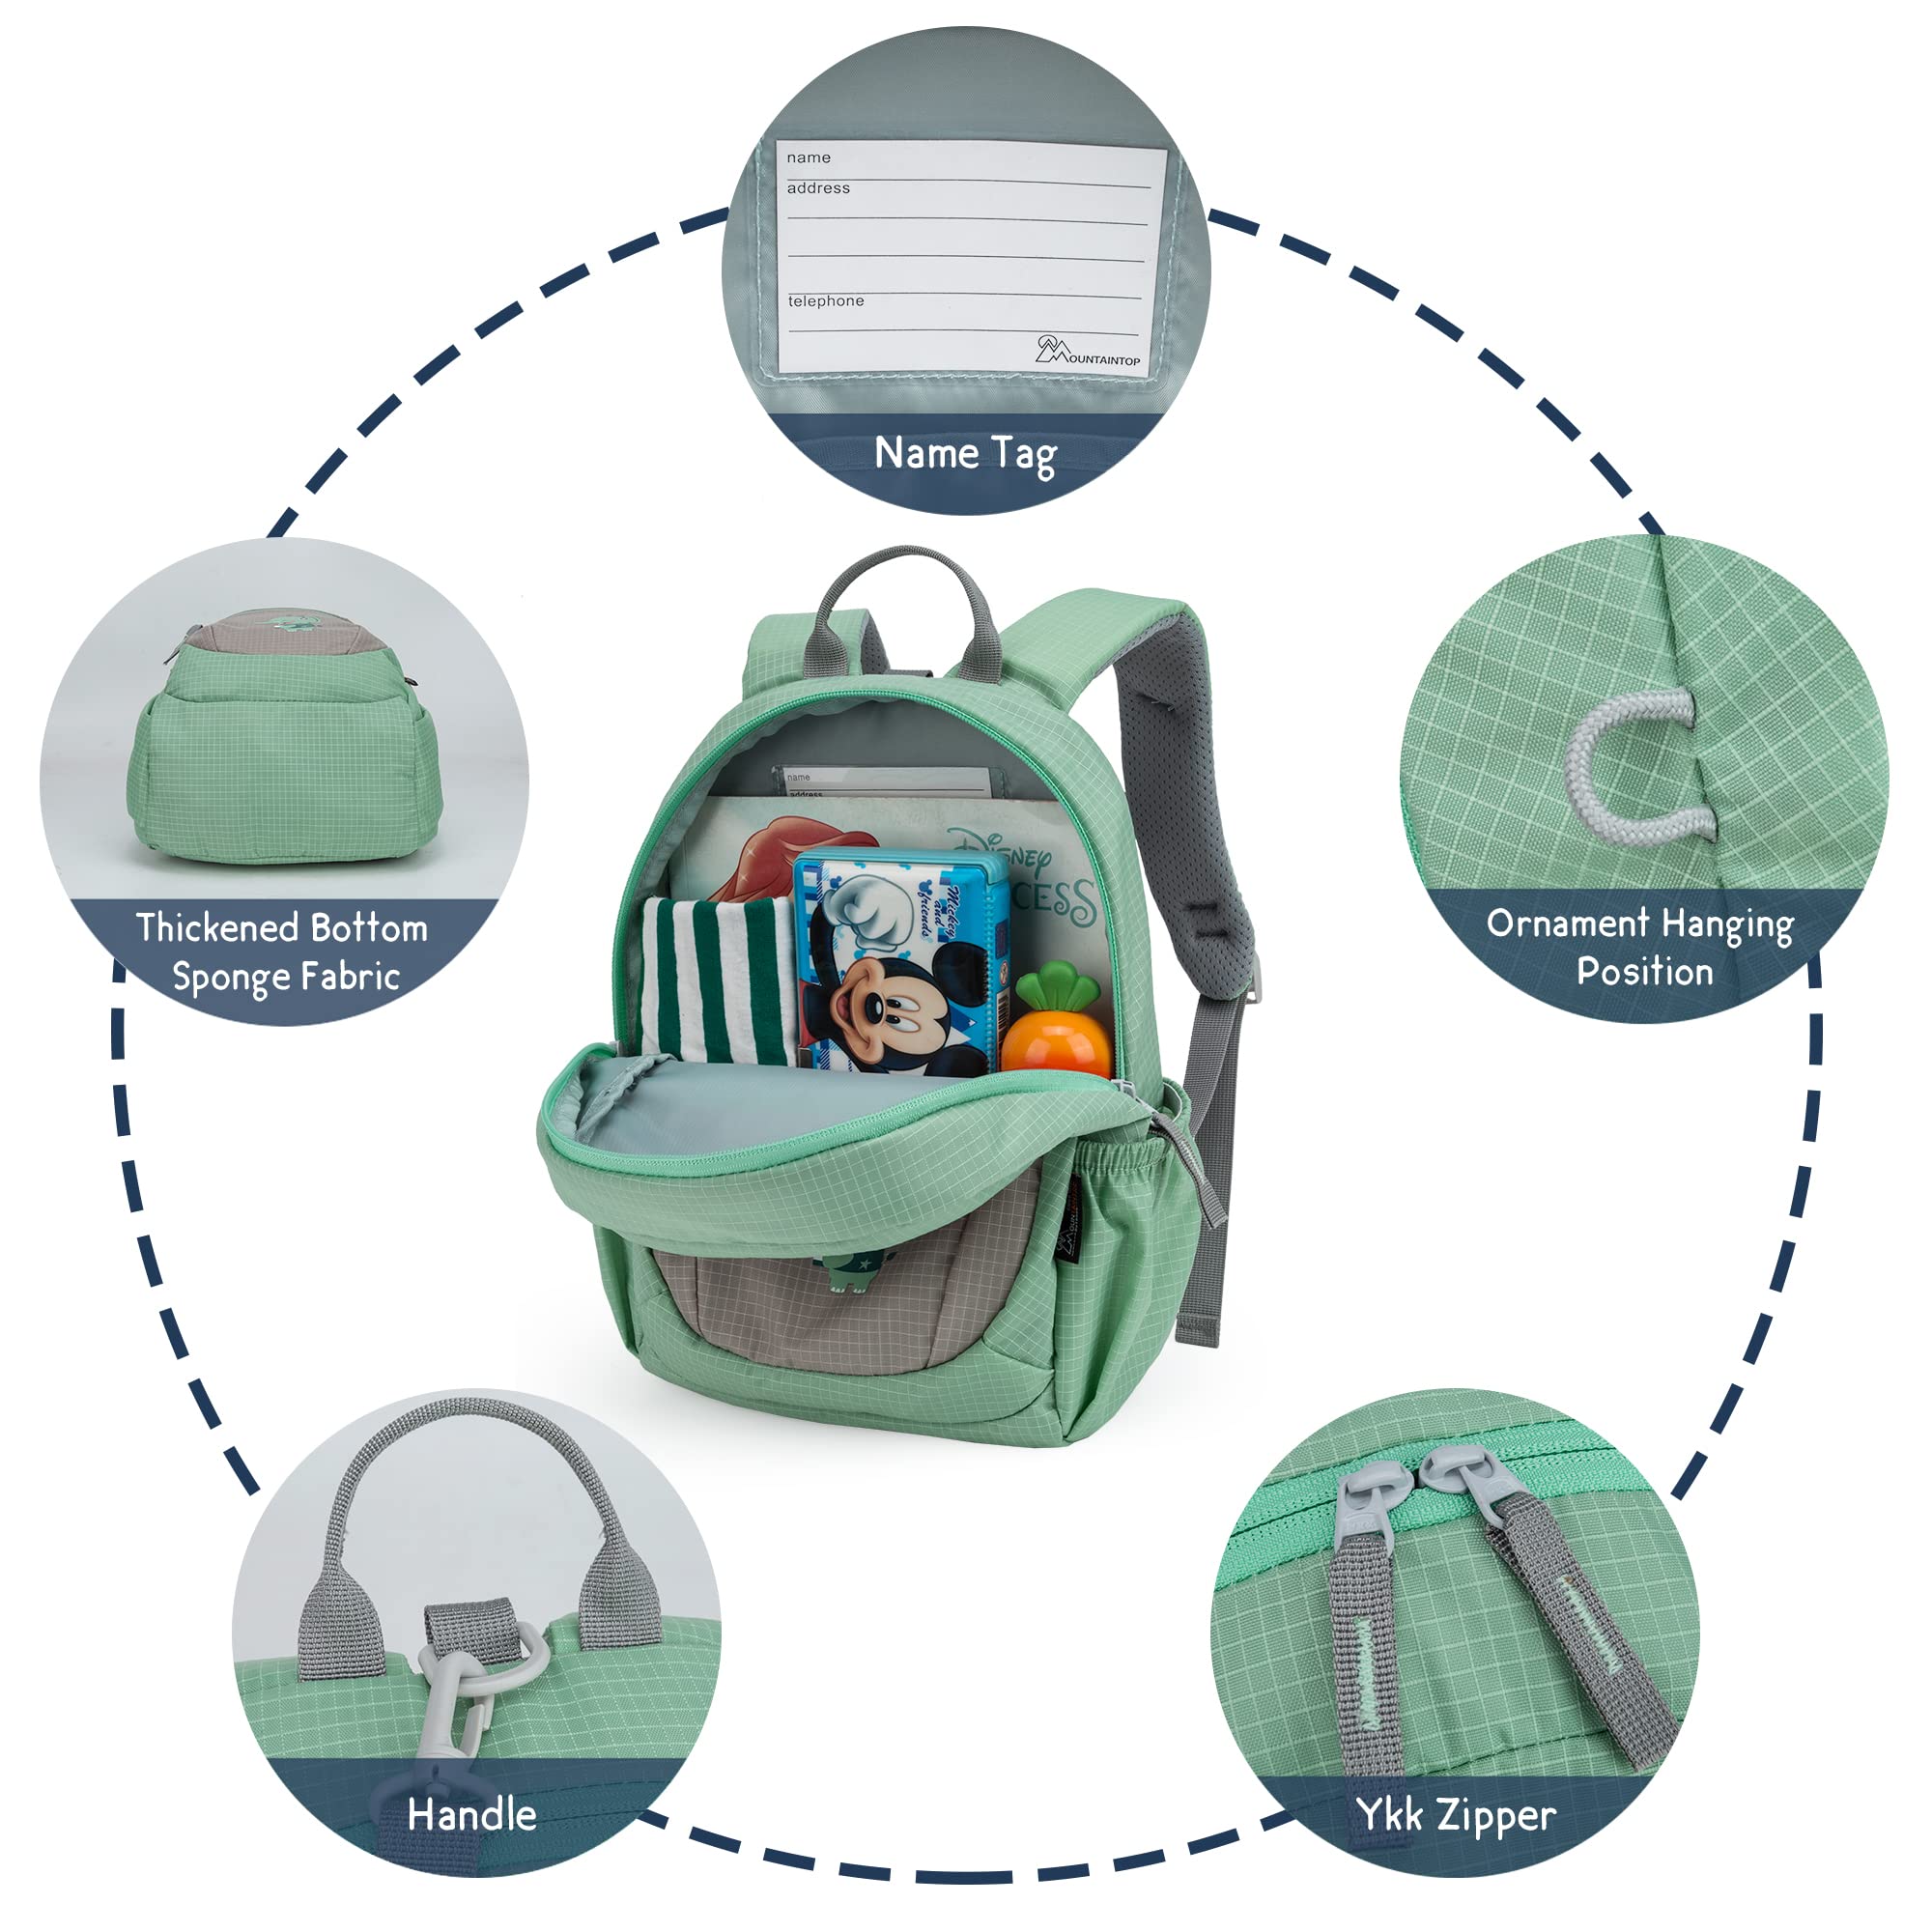 MOUNTAINTOP Kids Toddler Backpack for Boys Girls Preschool Kindergarten Bag